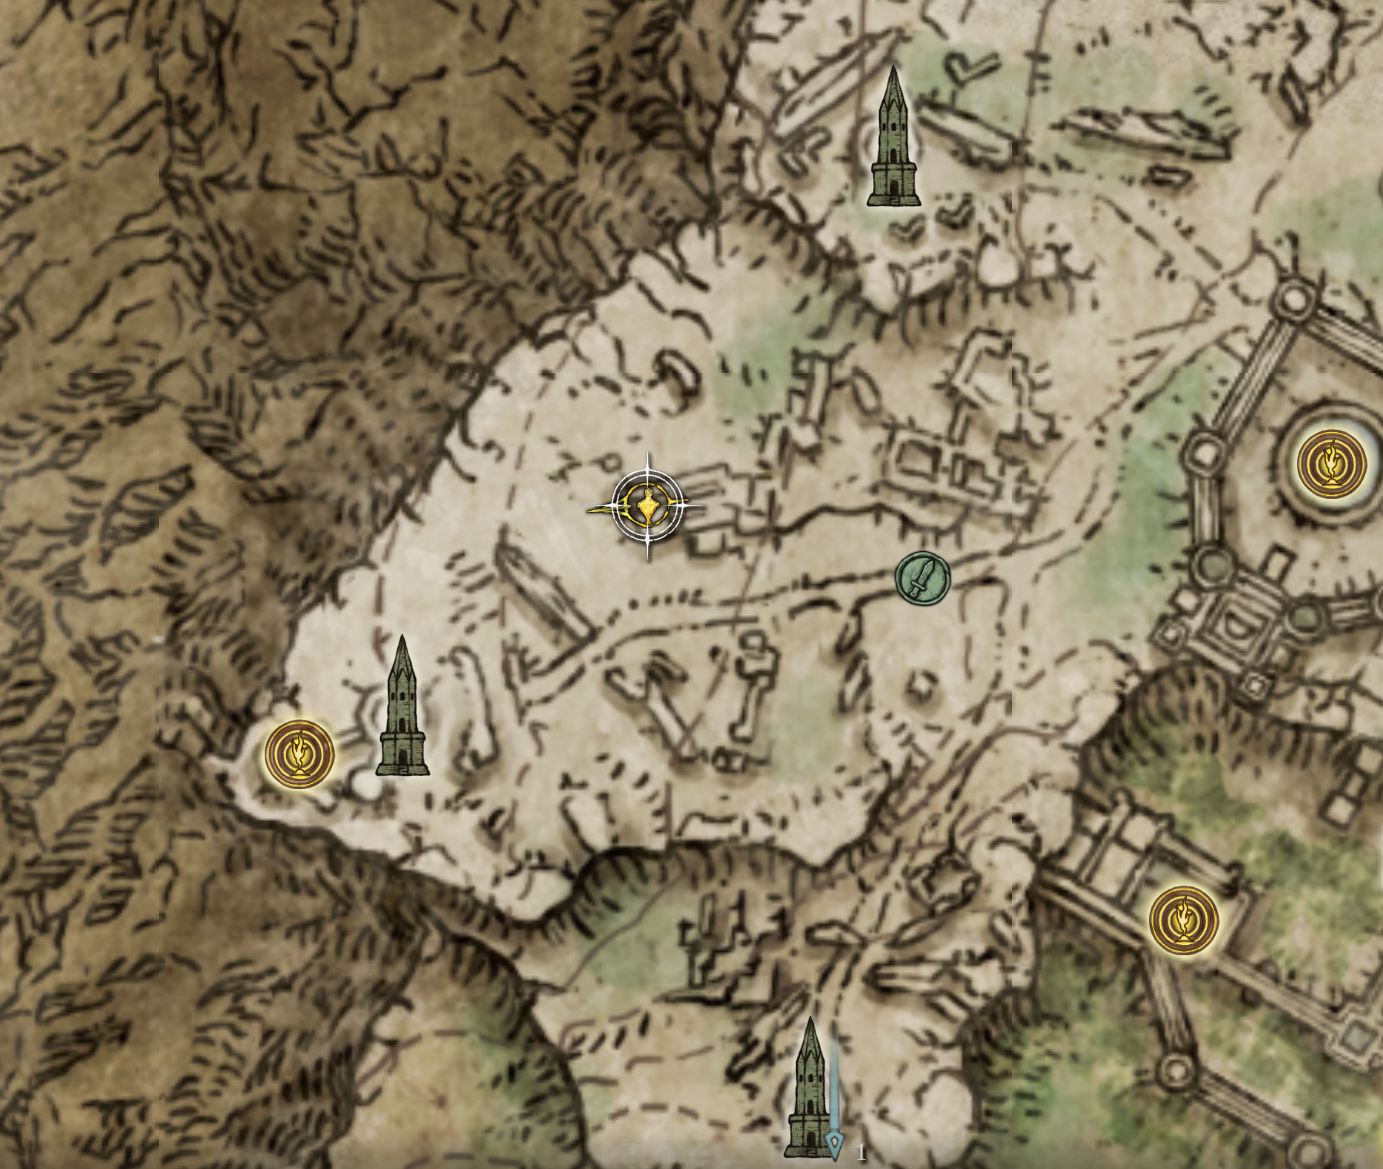 Elden Ring's map showing Sorceress Sellen's Location Near Ranni's Rise